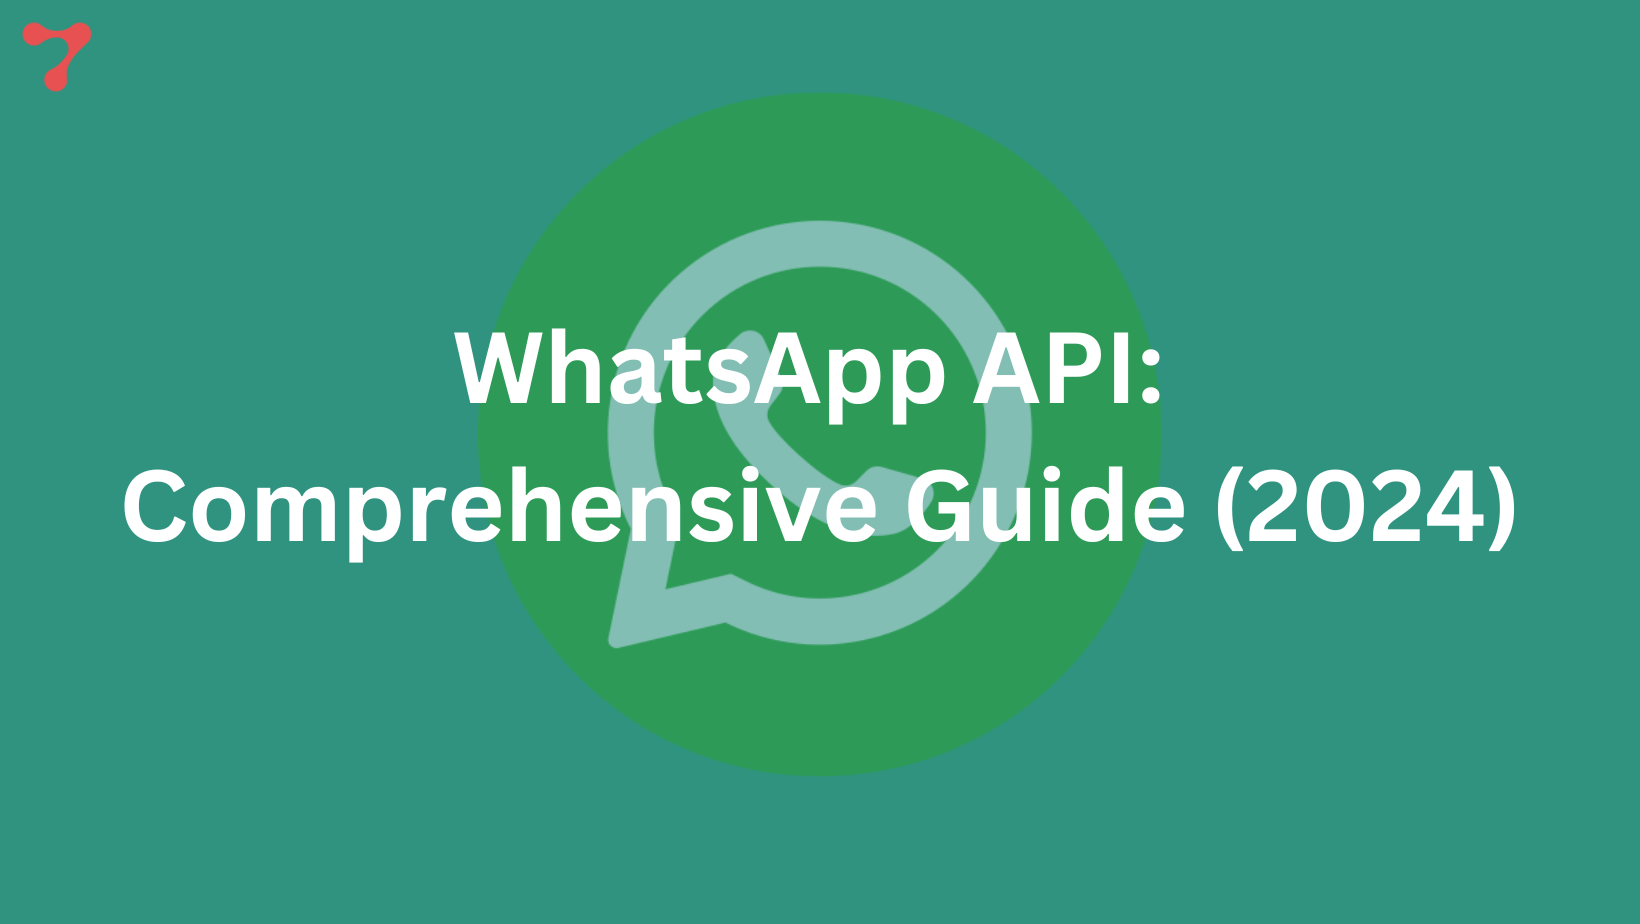 WhatsApp API: The Complete Guide (2024)